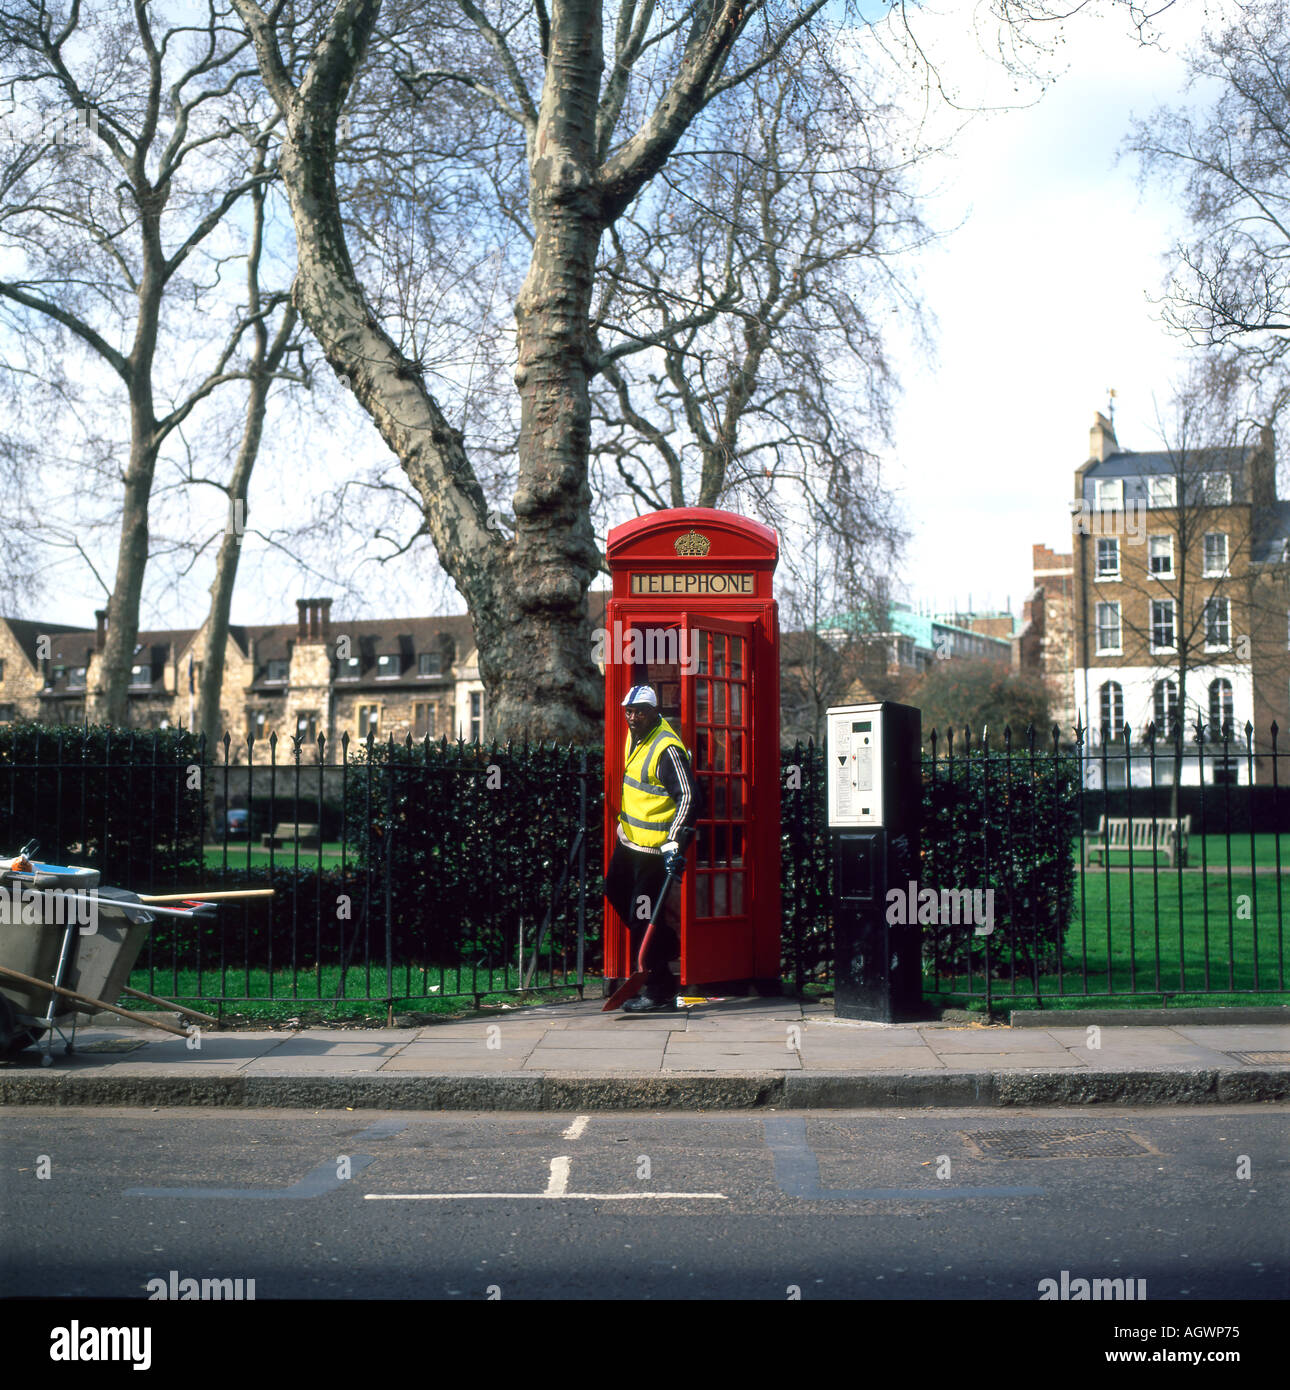 Limpieza de filtro de caja del teléfono rojo en Charterhouse Street, cerca de la plaza Charterhouse en Londres England Reino Unido. Kathy DEWITT Foto de stock